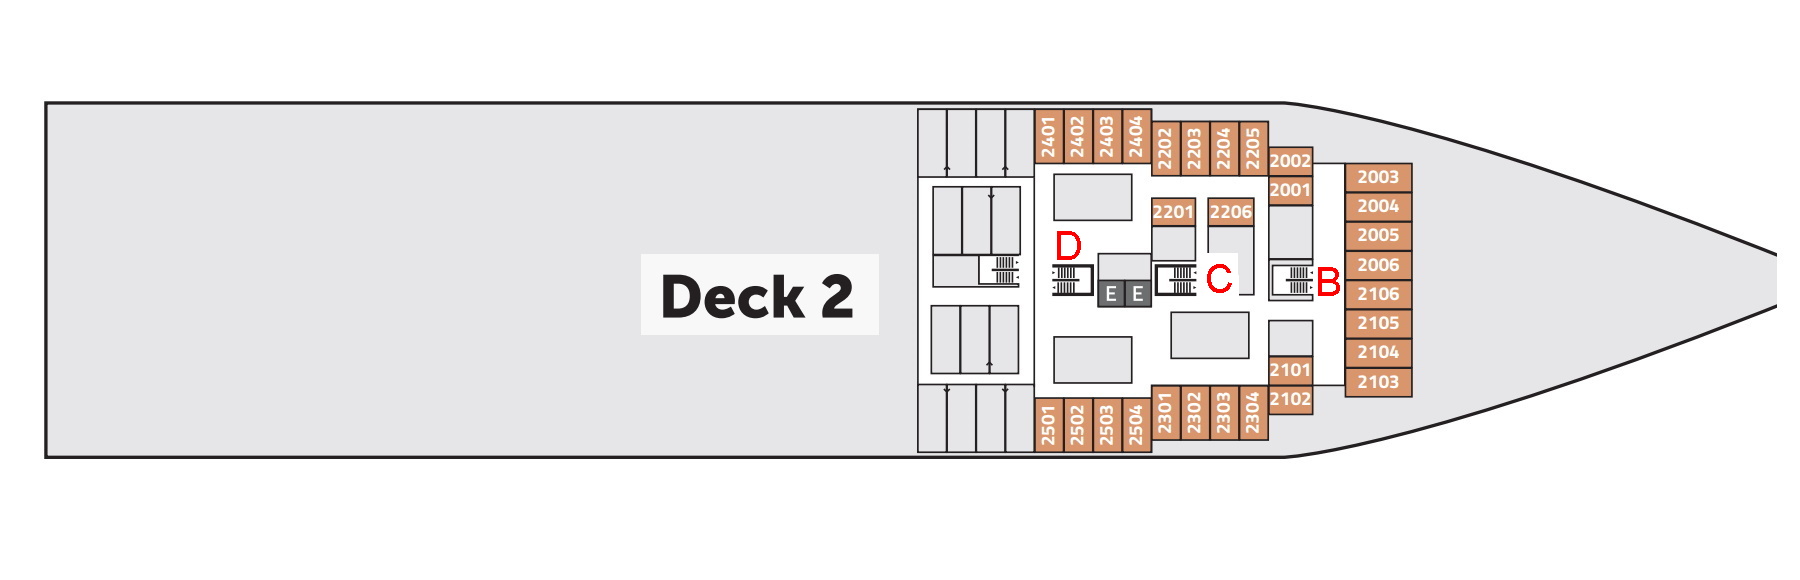 Deckplan Kabinen Norröna Deck 2